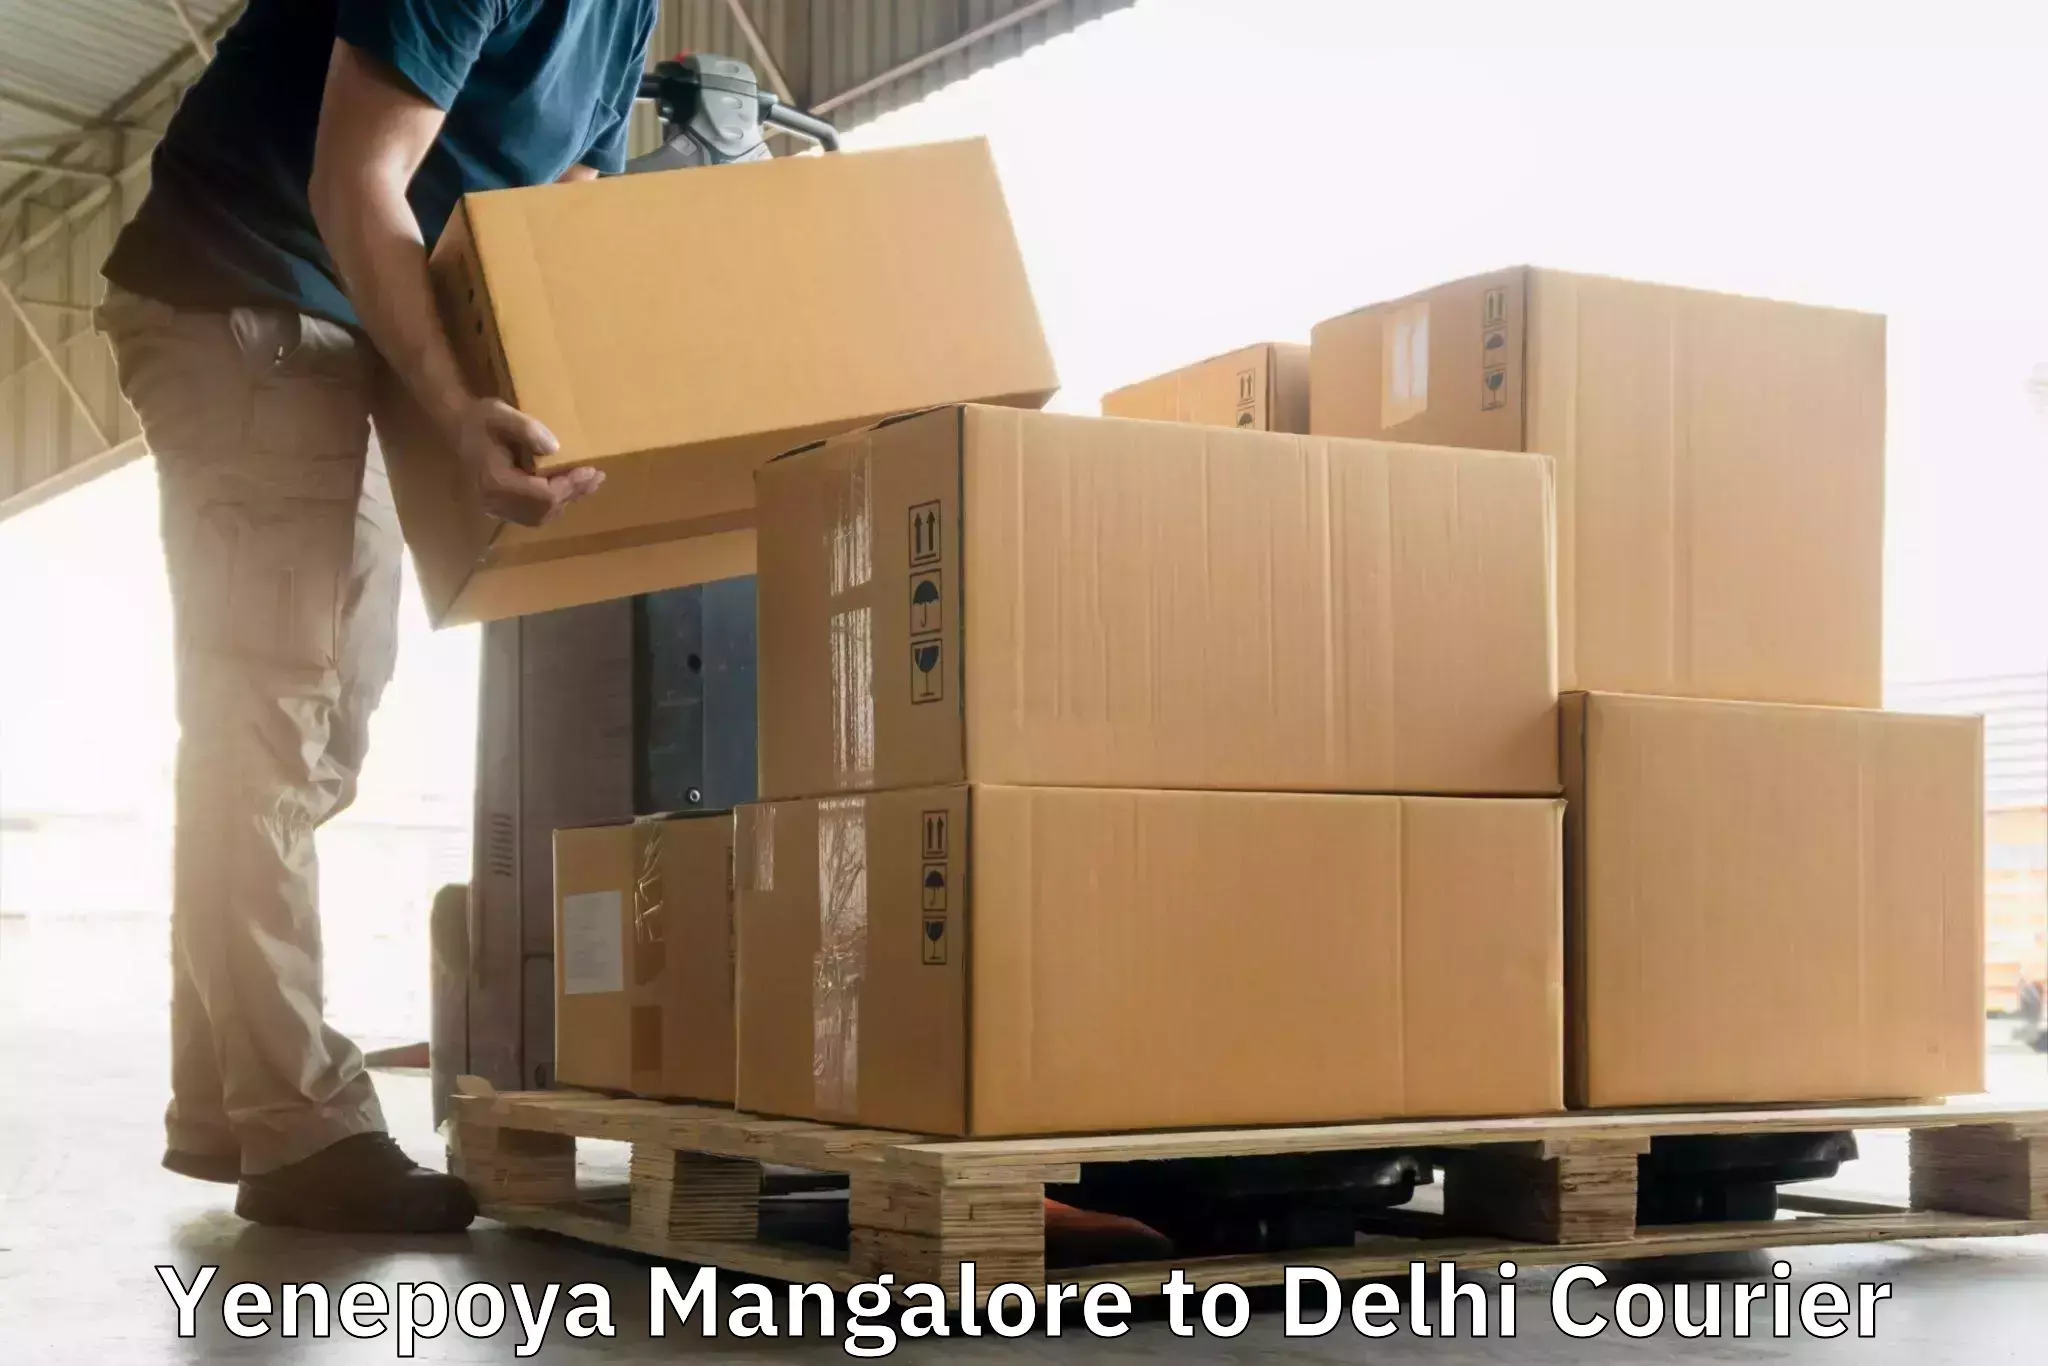 State-of-the-art courier technology Yenepoya Mangalore to Delhi